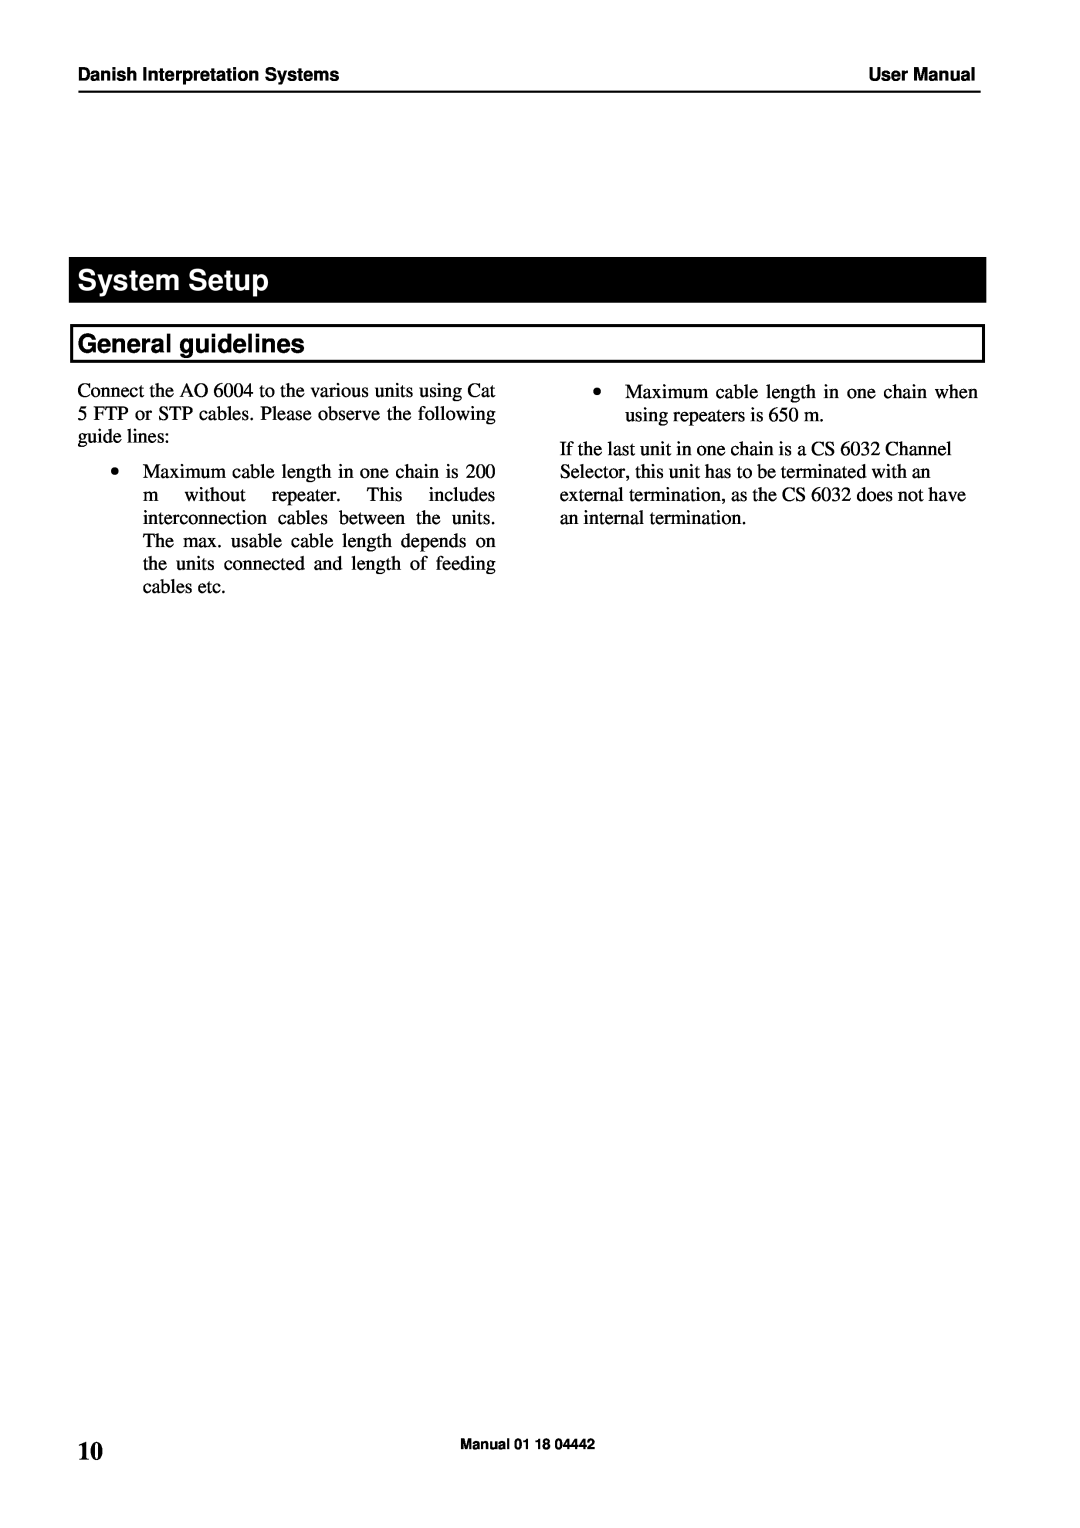 Listen Technologies AO 6004 user manual System Setup, General guidelines 